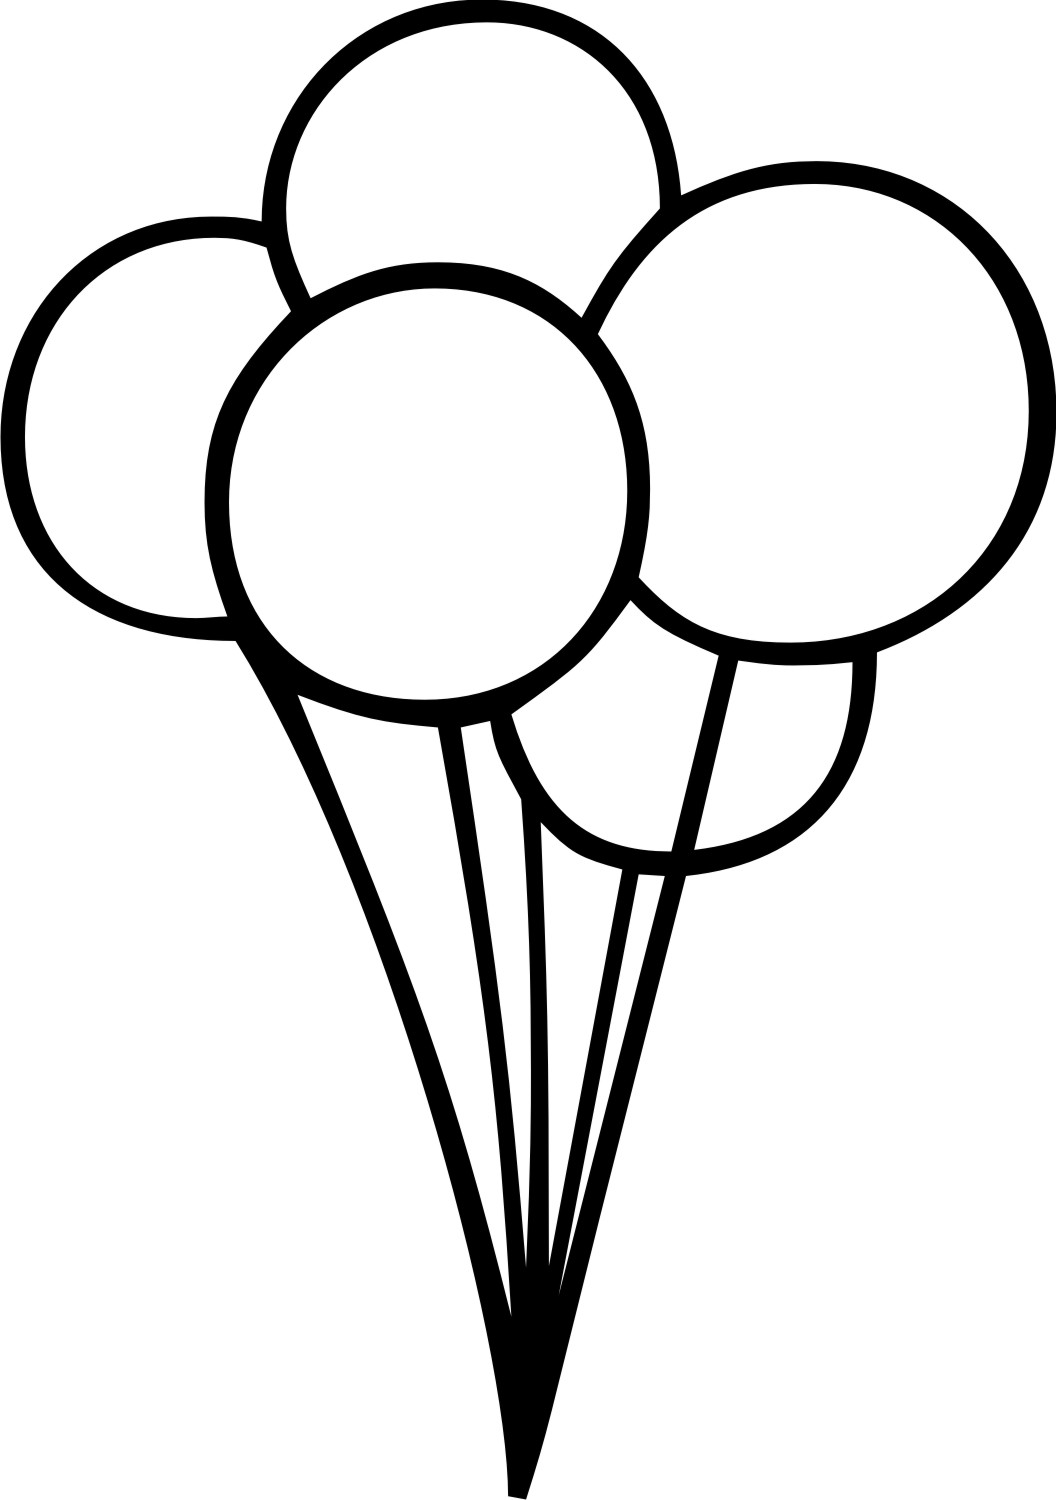 Balloons And Strings Custom Koozie Art